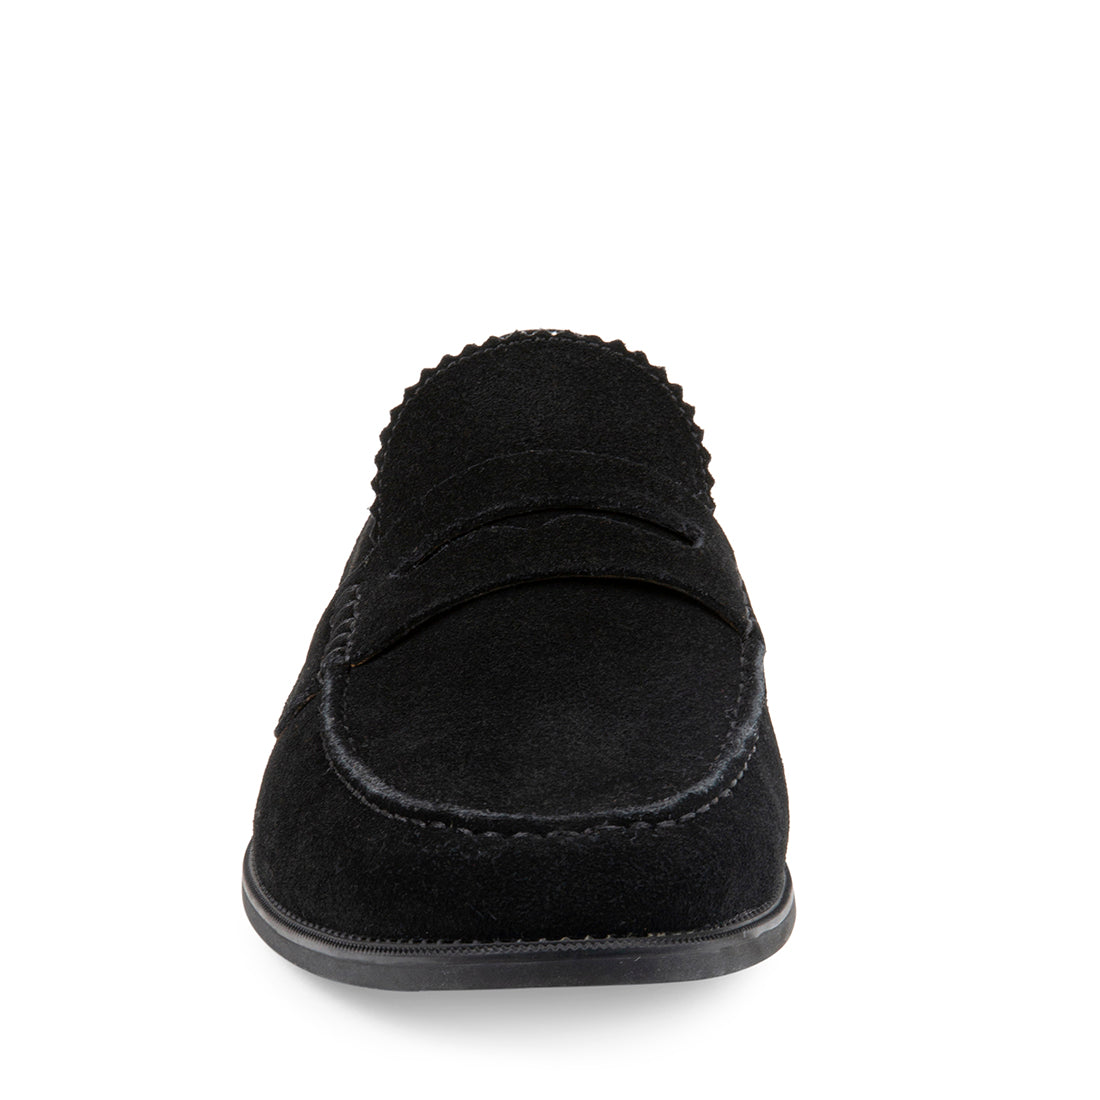 RAMSEE Black Suede Men's Casual Shoes | Men's Designer Shoes – Steve ...